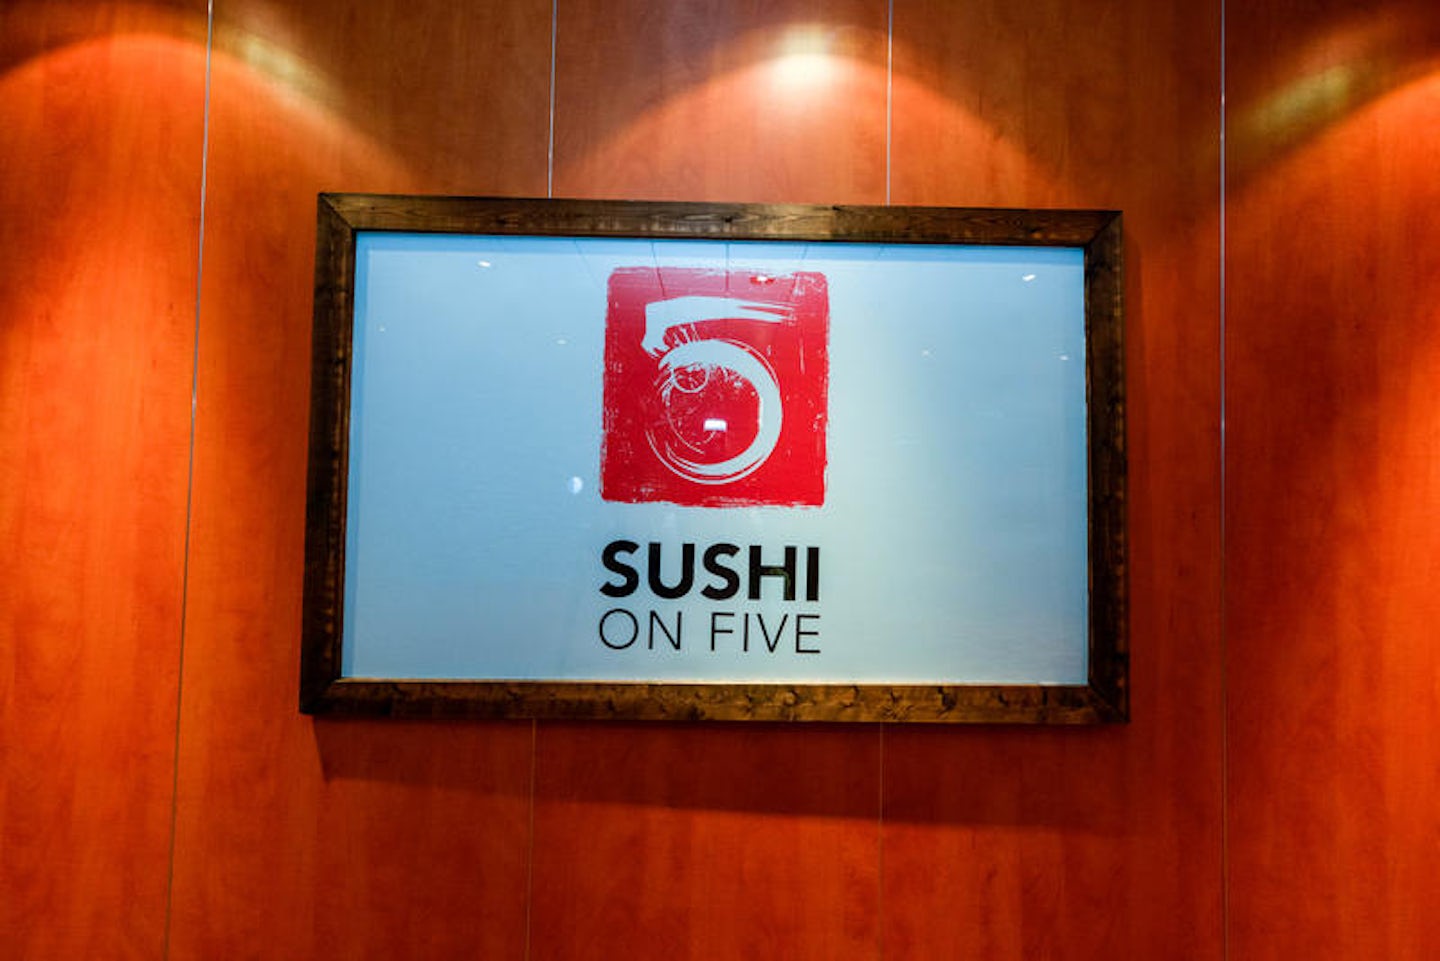 Sushi on Five on Celebrity Summit